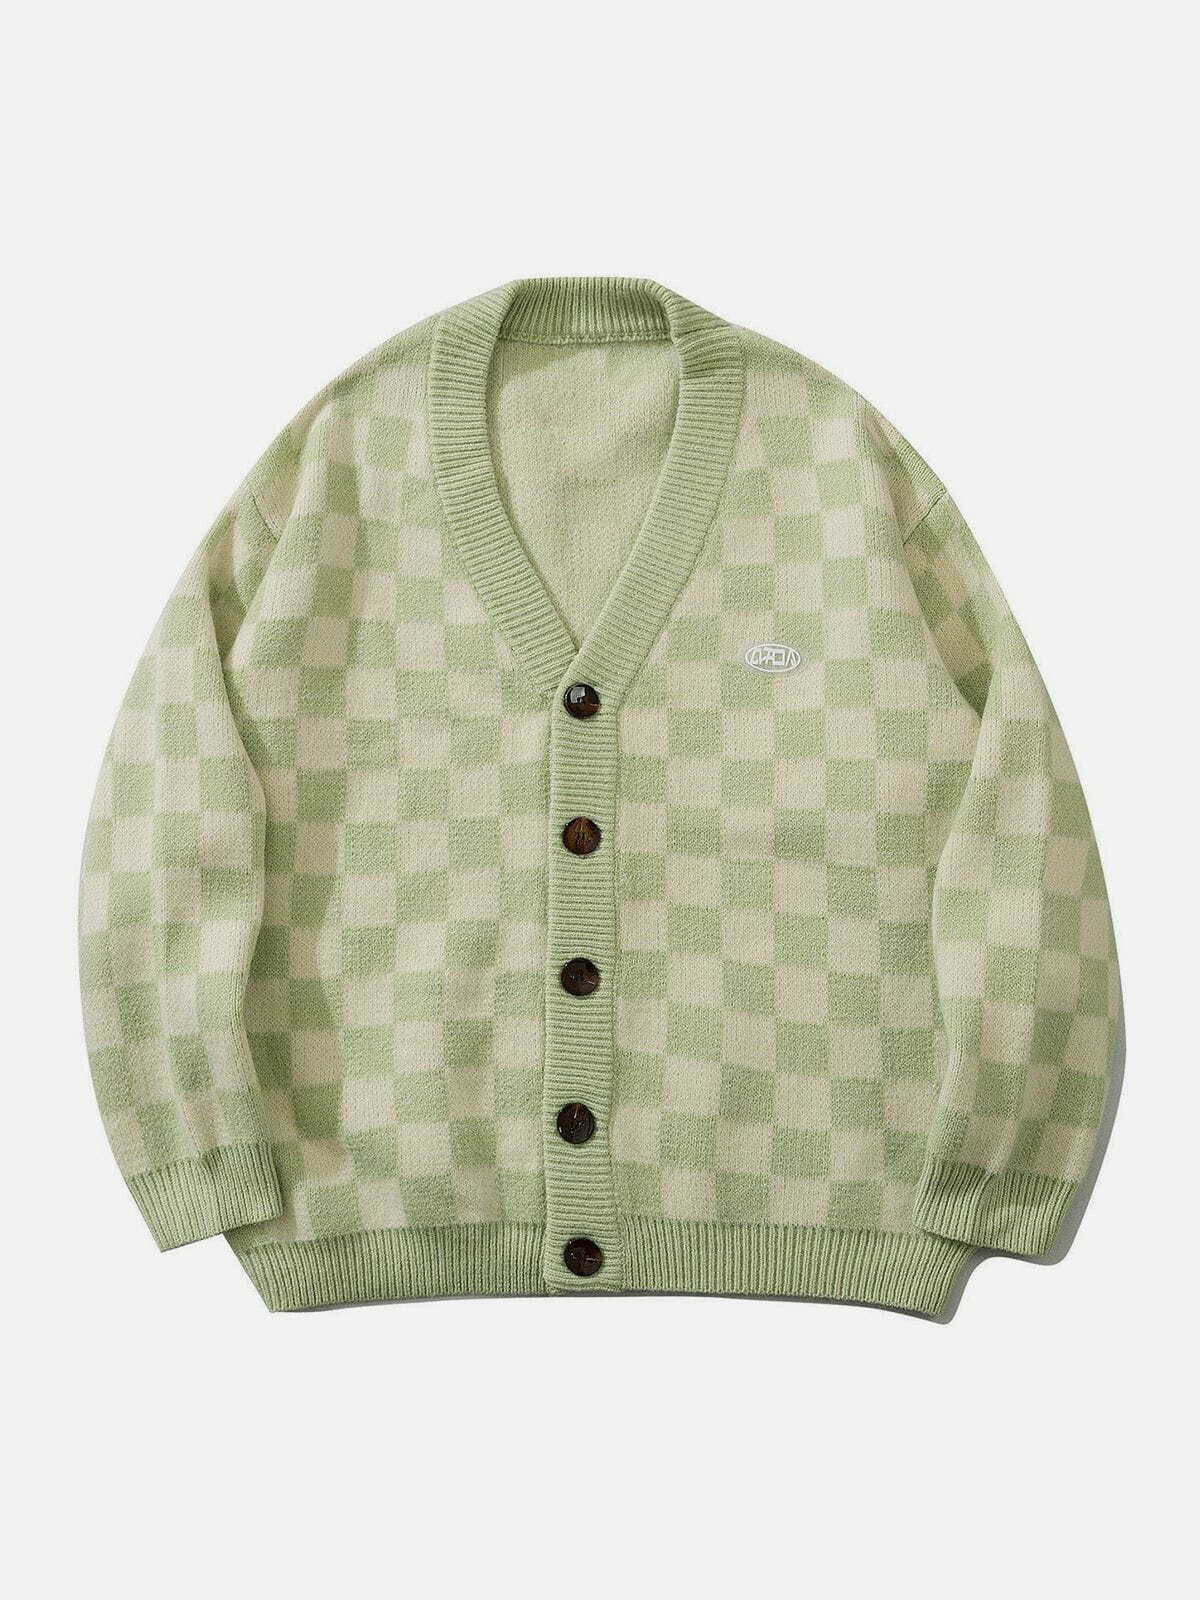 checkerboard knit cardigan retro urban chic 2526